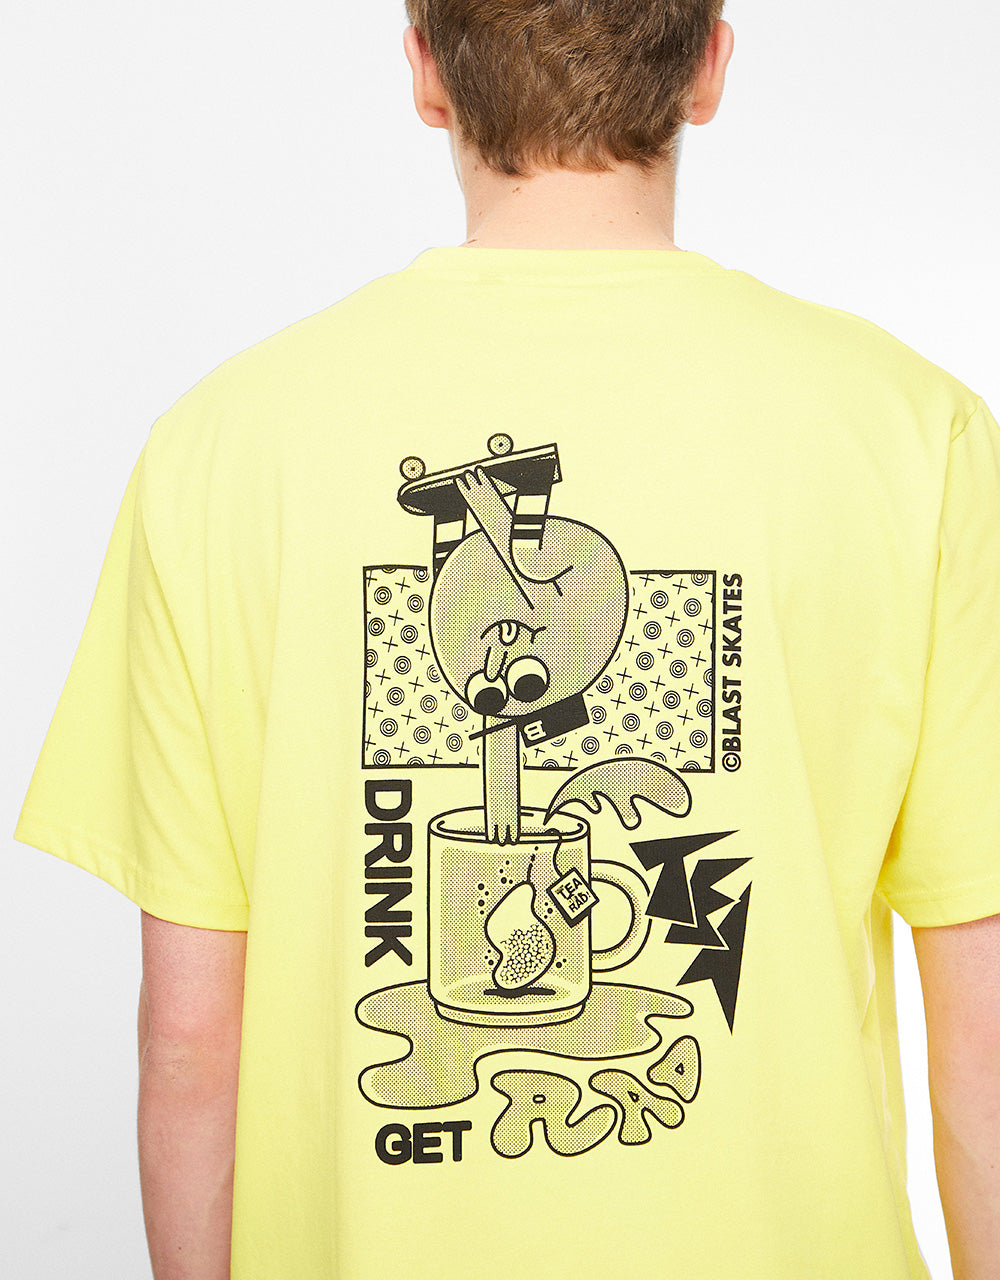 Lovenskate x Blast Drink Tea, Get Rad! T-Shirt - Yellow